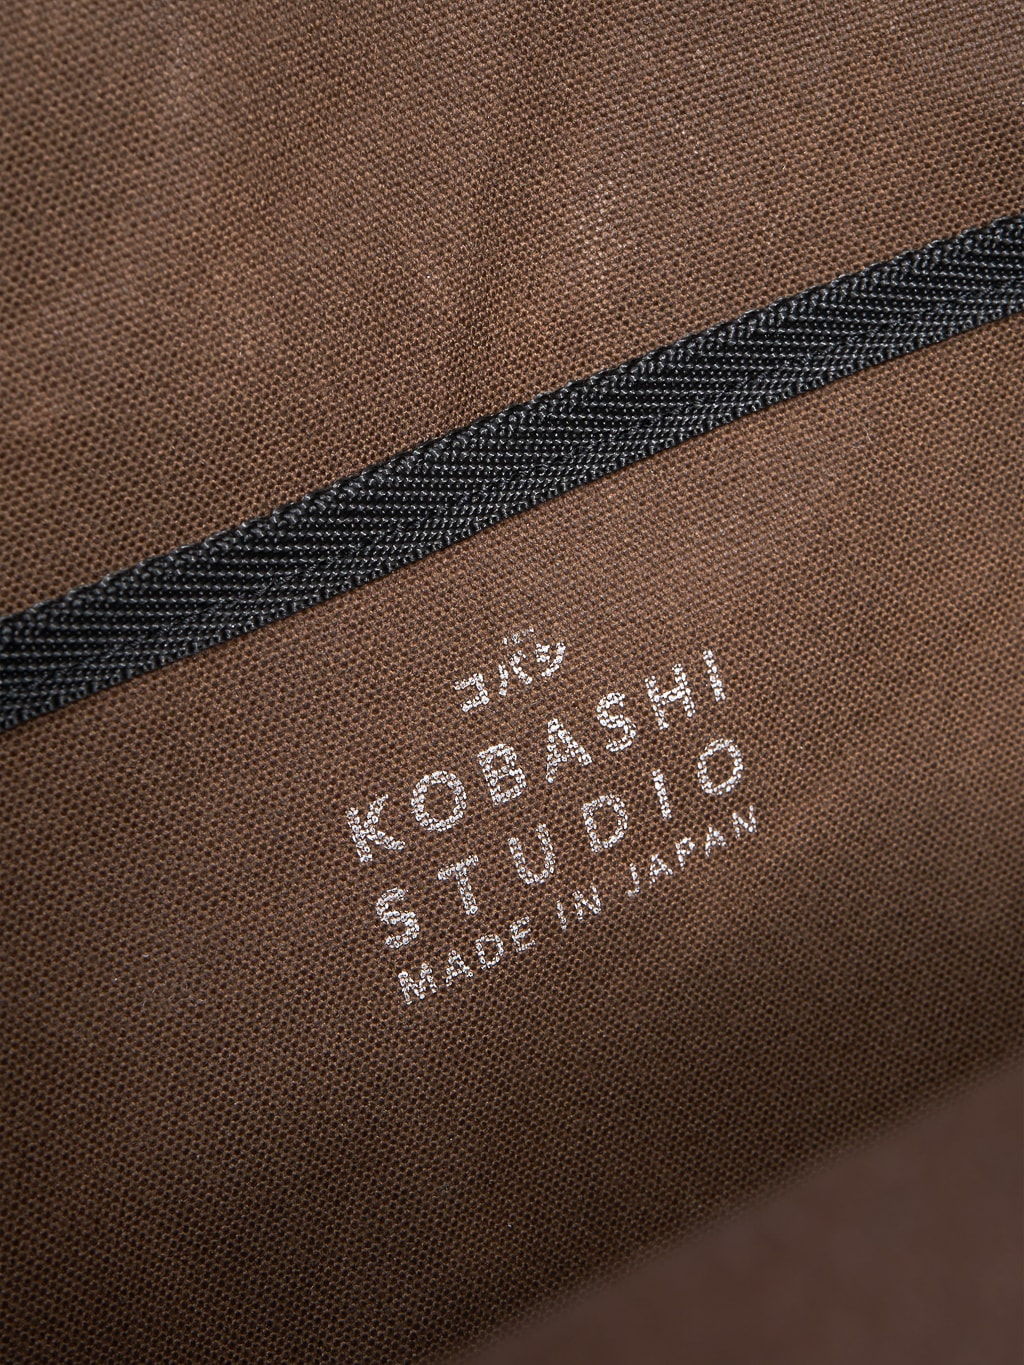 Kobashi Studio Standard Backpack Brown logo